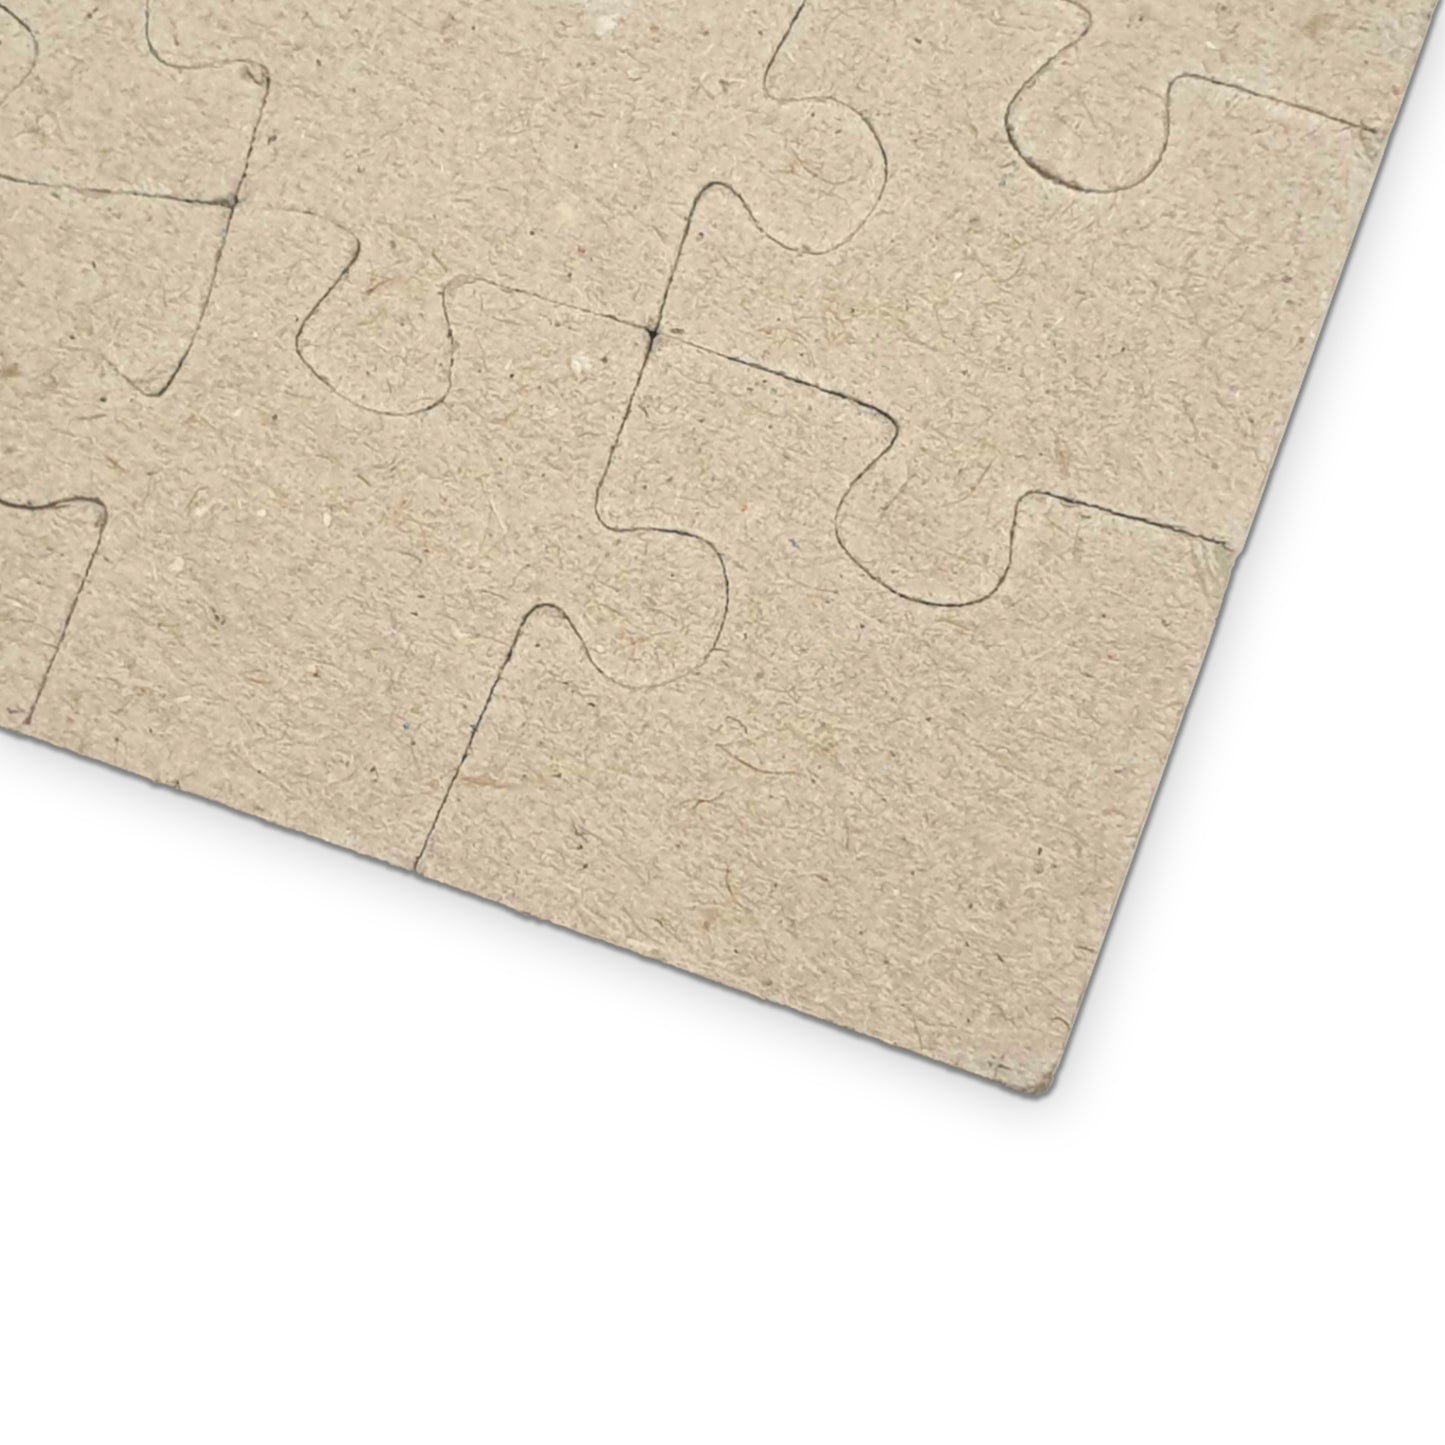 Bohemian Road Trip puzzle | Boho Jigsaw Collection | 500-piece Puzzle | Boho | jigsaw puzzle | games